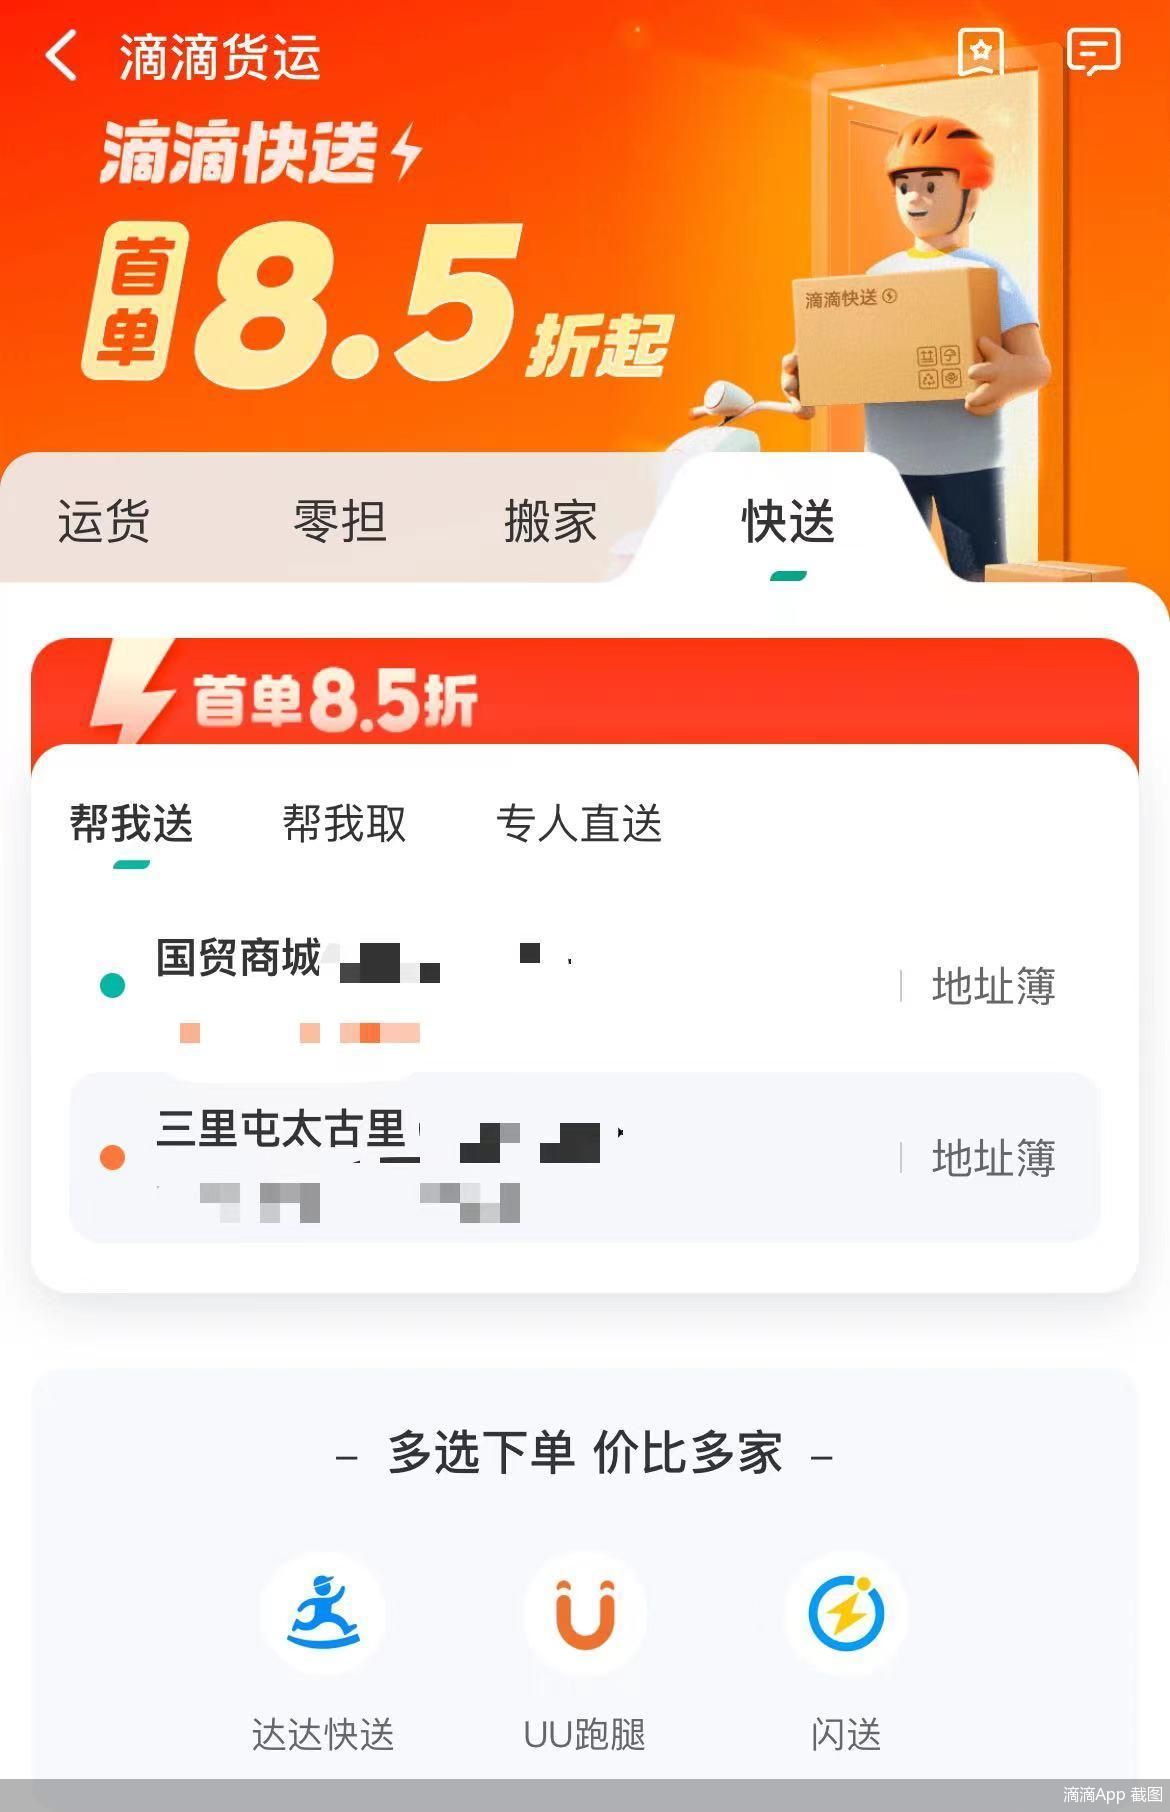 bst365老牌体育滴滴“快递”_北京商报(图1)